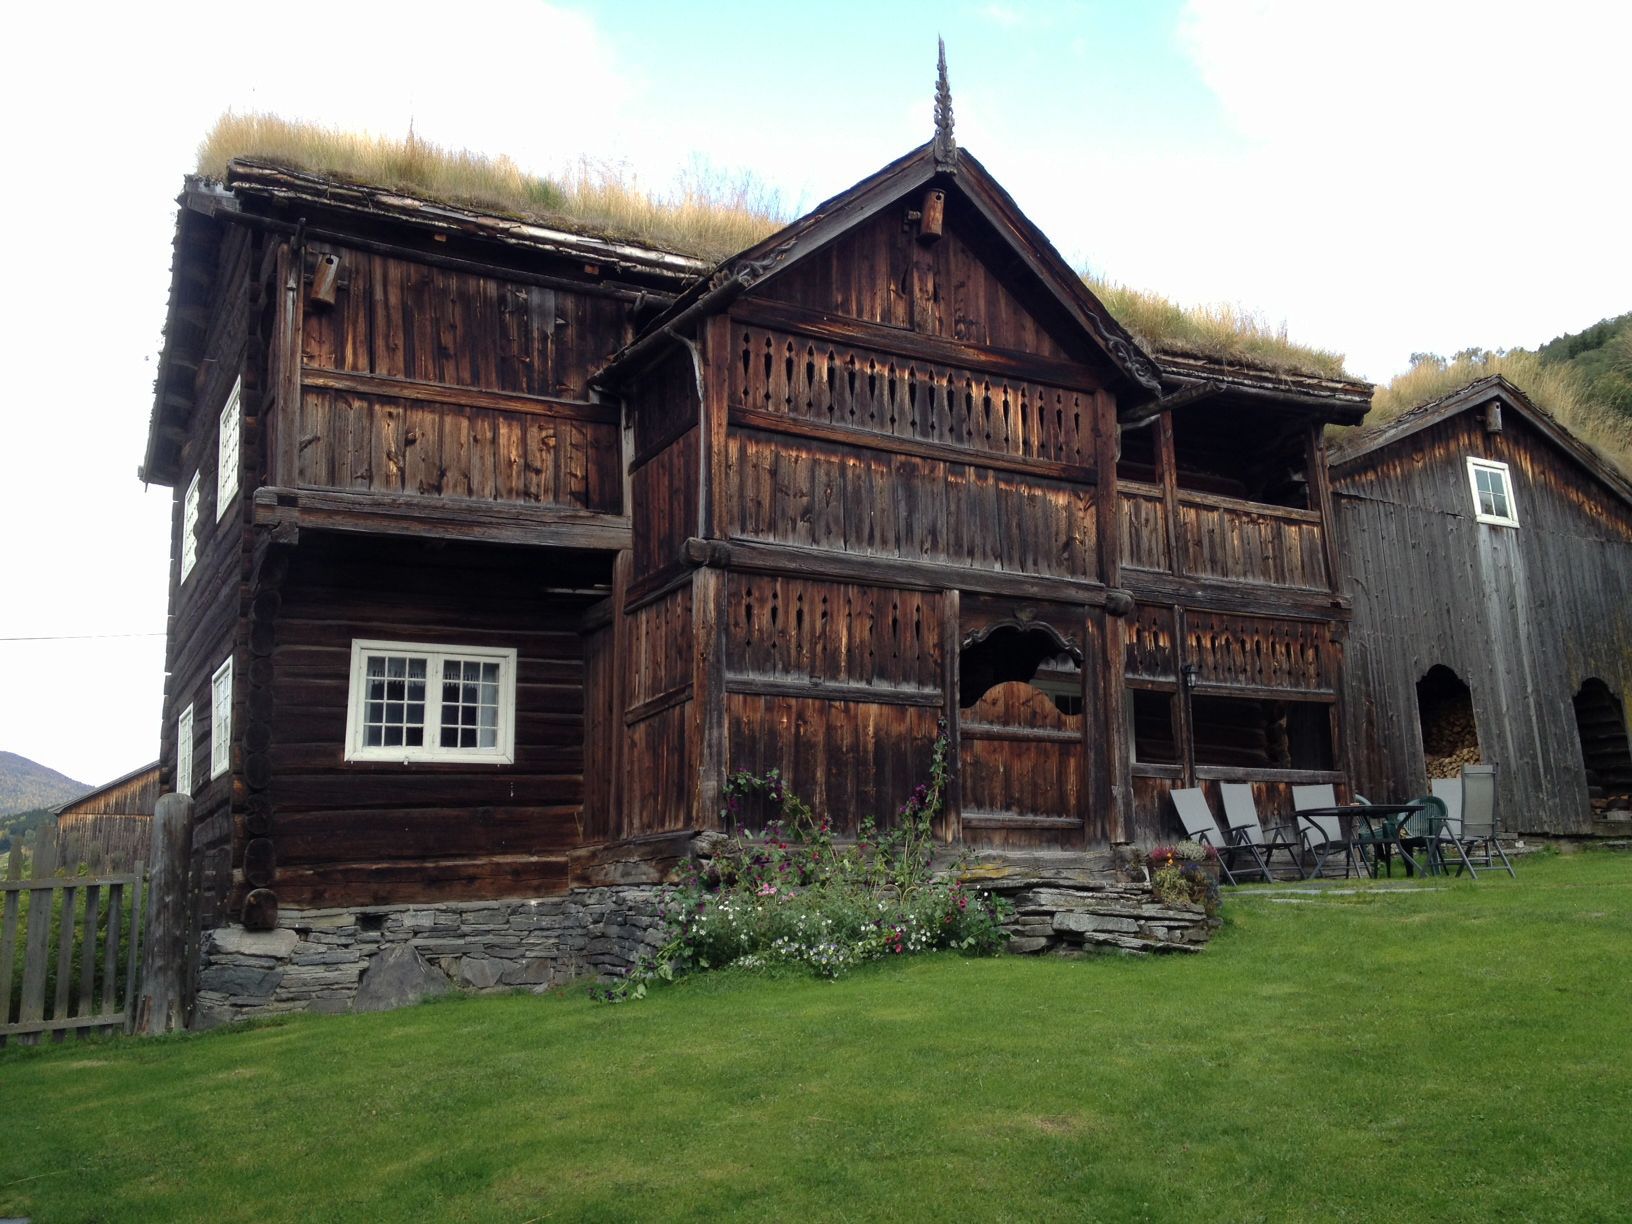 17th century log farmhouse in Heidal, Norway | Old World | Pinterest ...